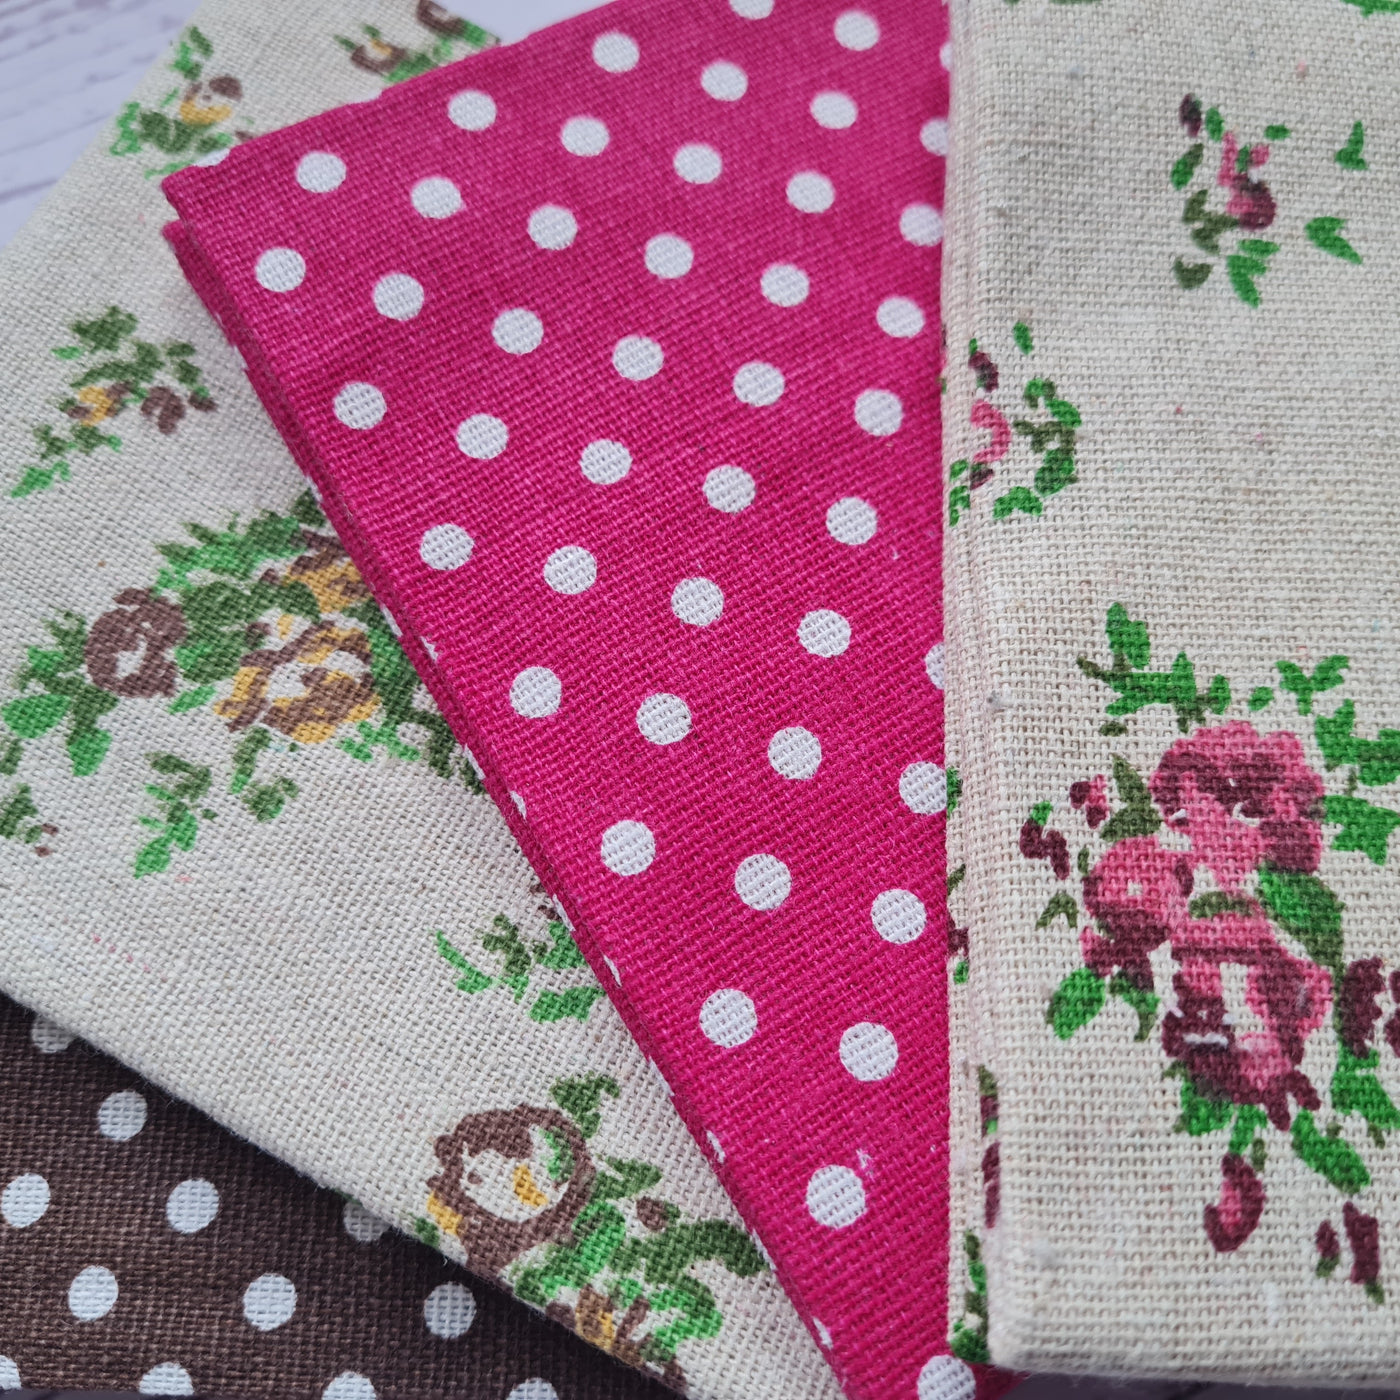 Linen mix vintage look floral, polkadot spot red natural fabrics fat quarter bundle of 4 fabrics. Crafts, patchwork.